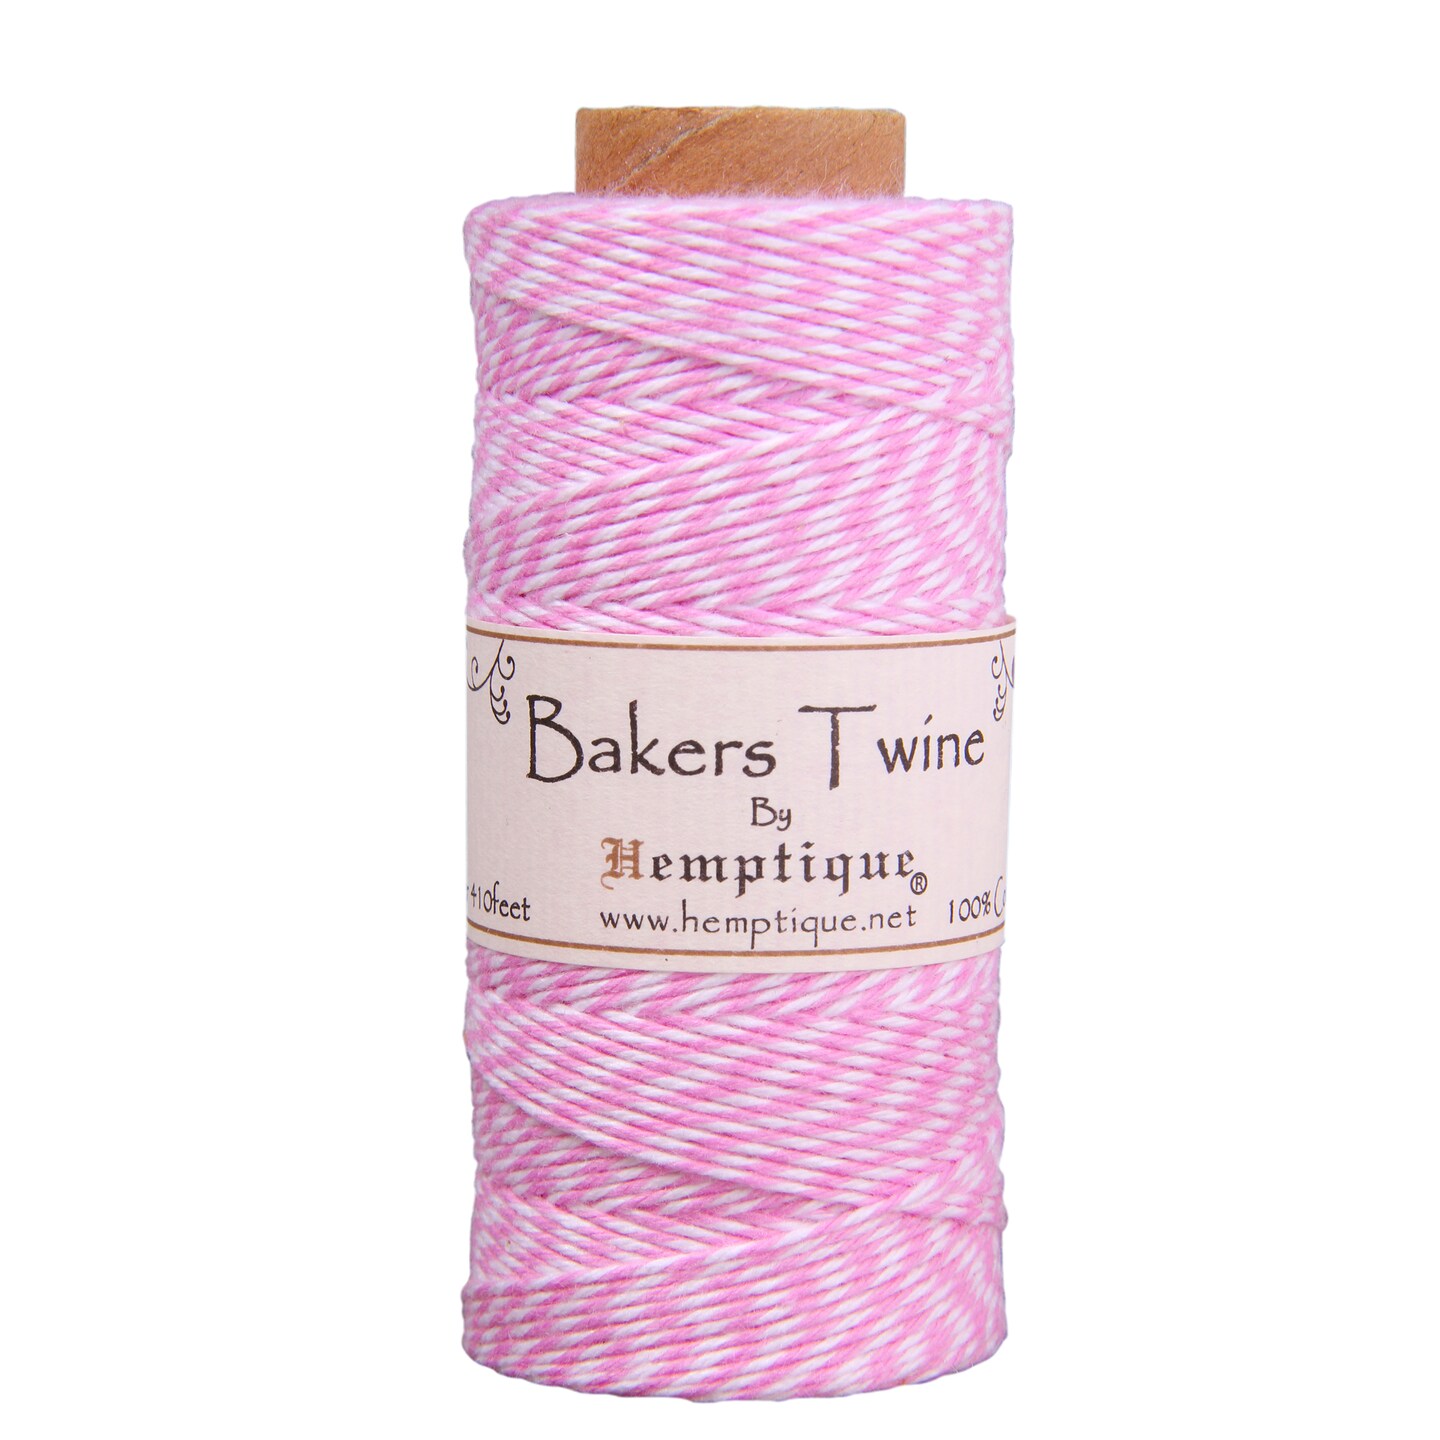 Hemptique Bakers Twine Spool, Light Pink/White